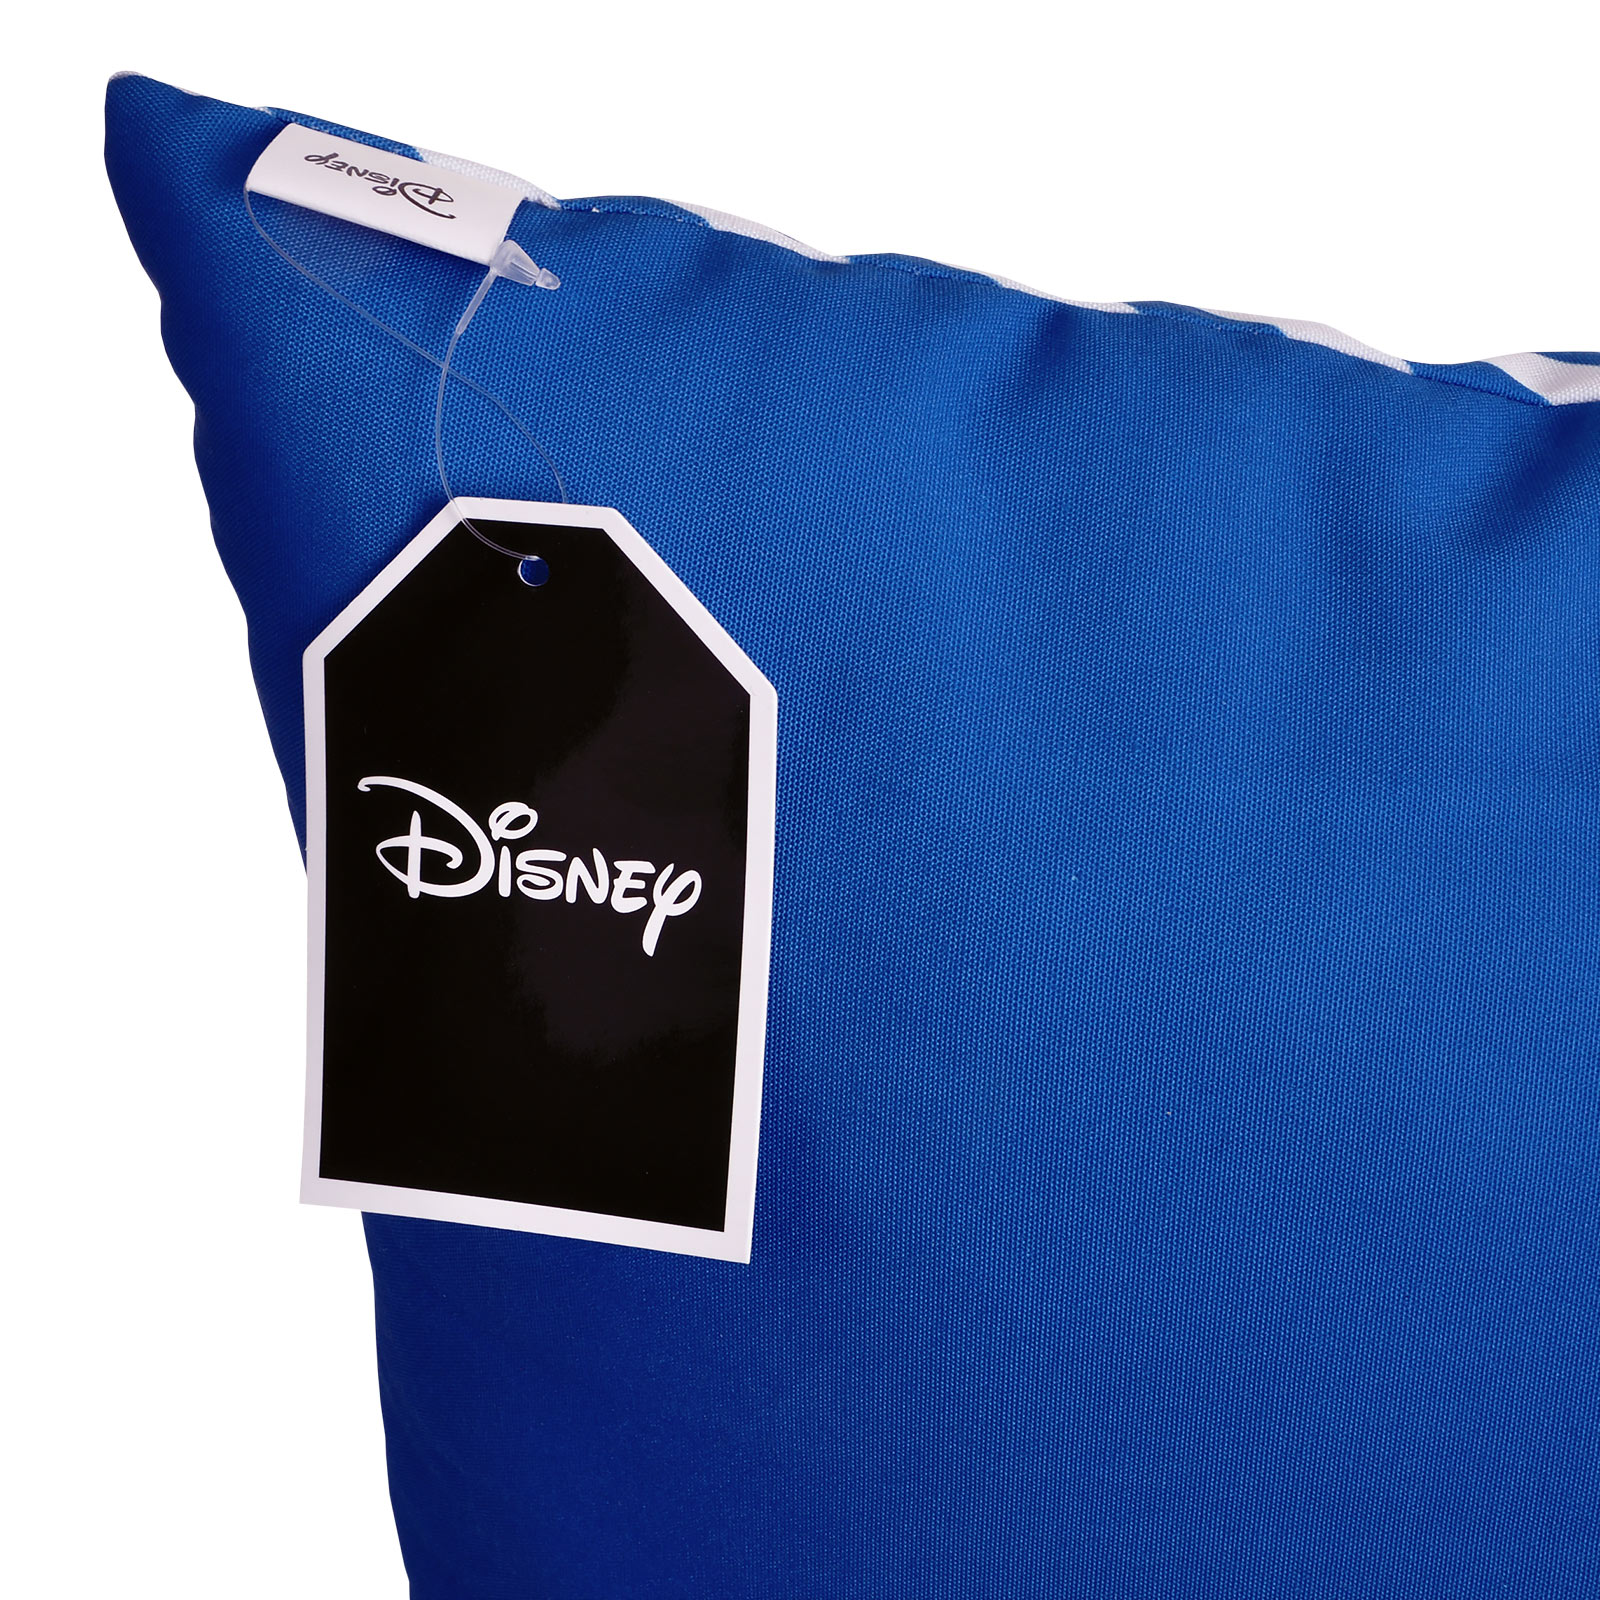 Snow White Pop-Art Pillow